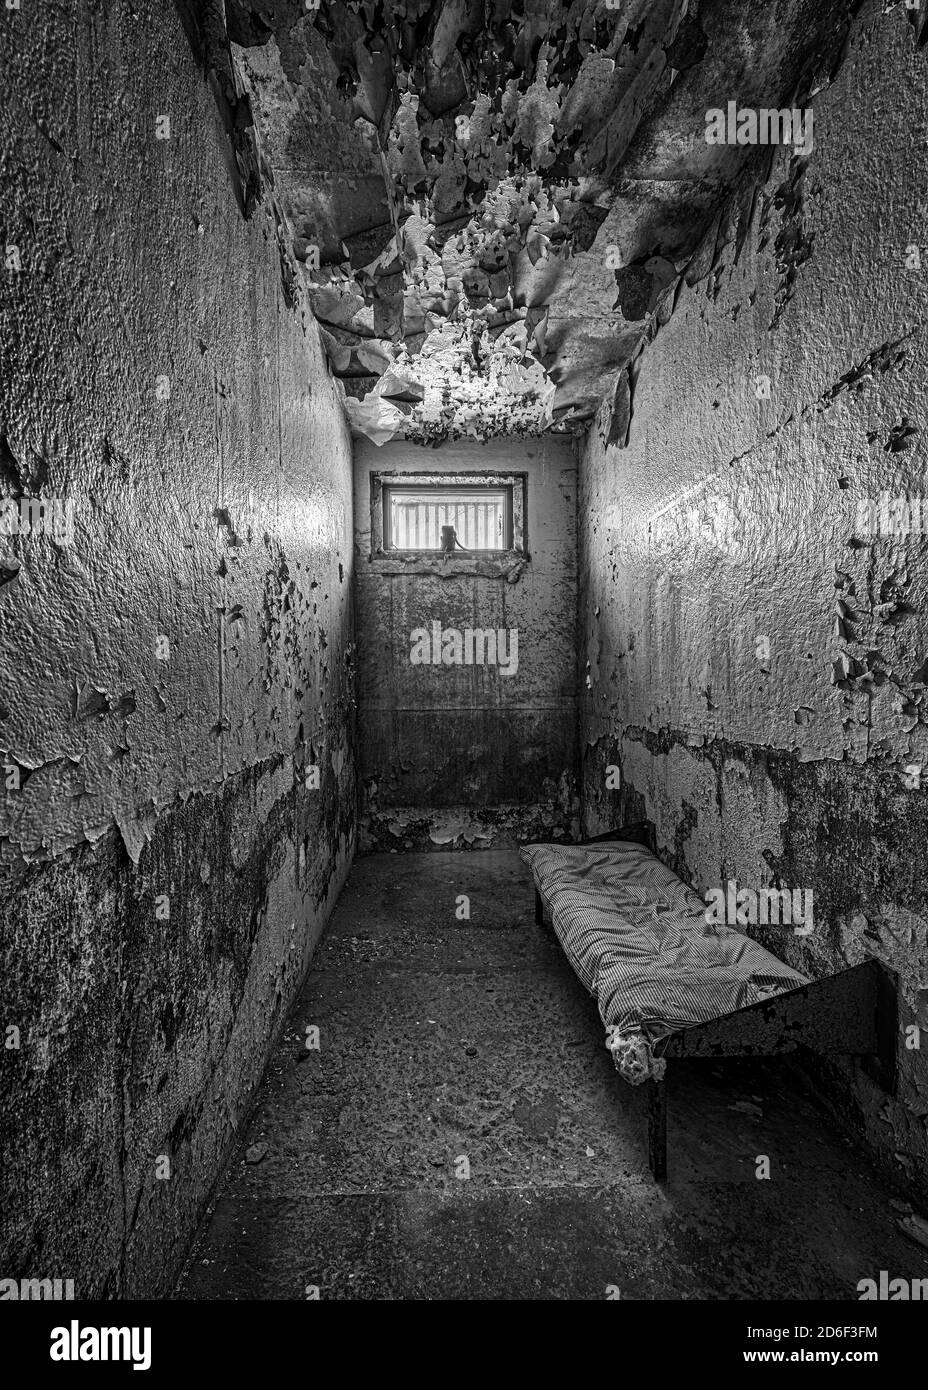 Cell on Death Row of the Joliet State Prison on 1125 Collins Street in Joliet, Illinois Stock Photo